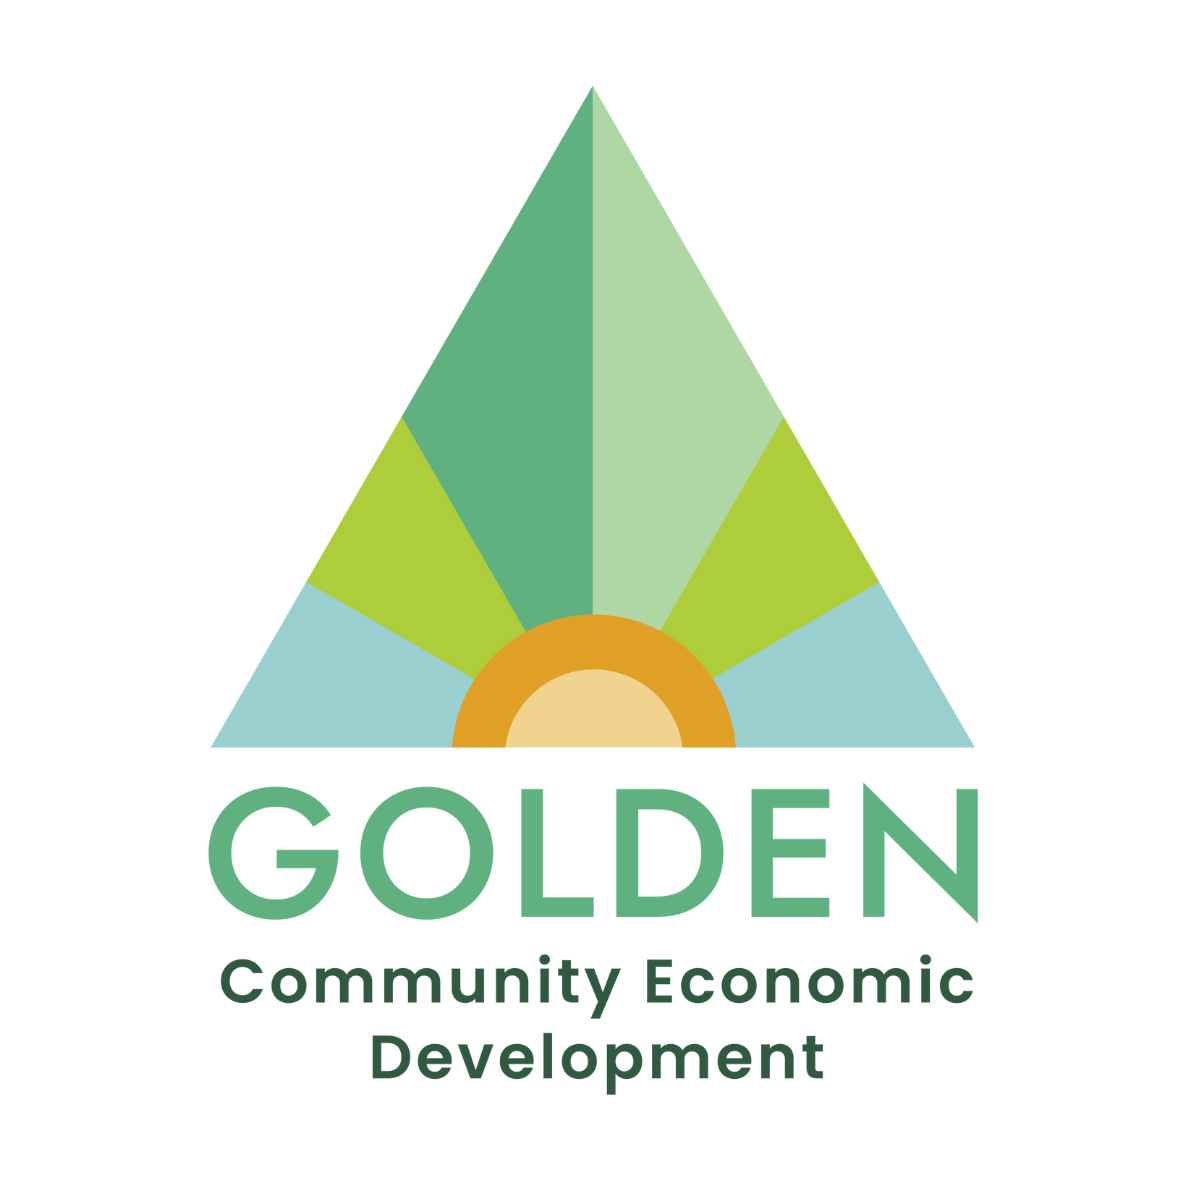 GOLDEN COMMUNITY ECONOMIC DEVELOPMENT